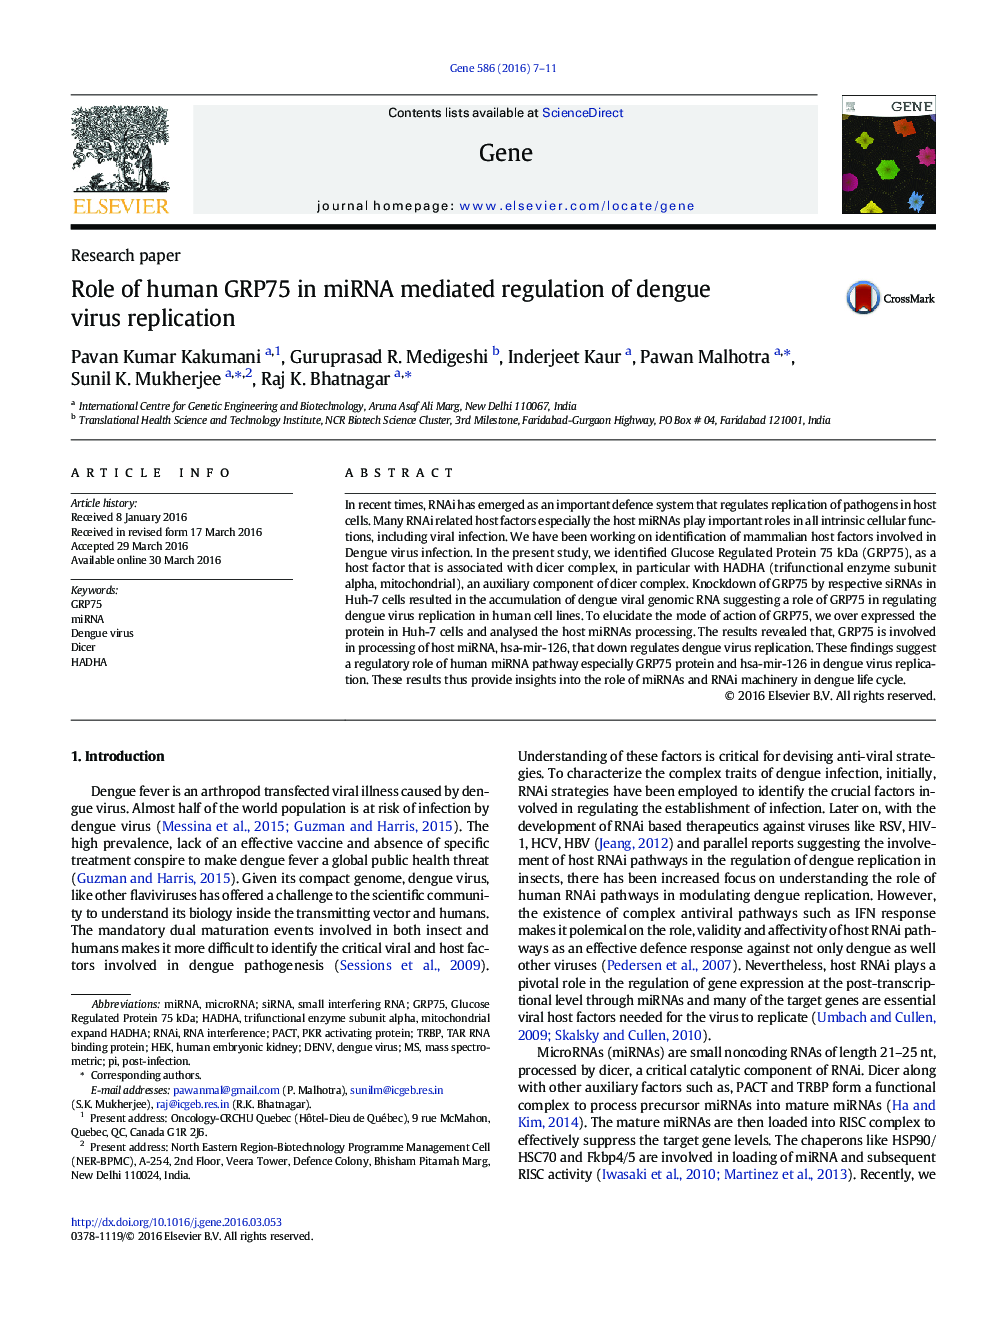 Role of human GRP75 in miRNA mediated regulation of dengue virus replication